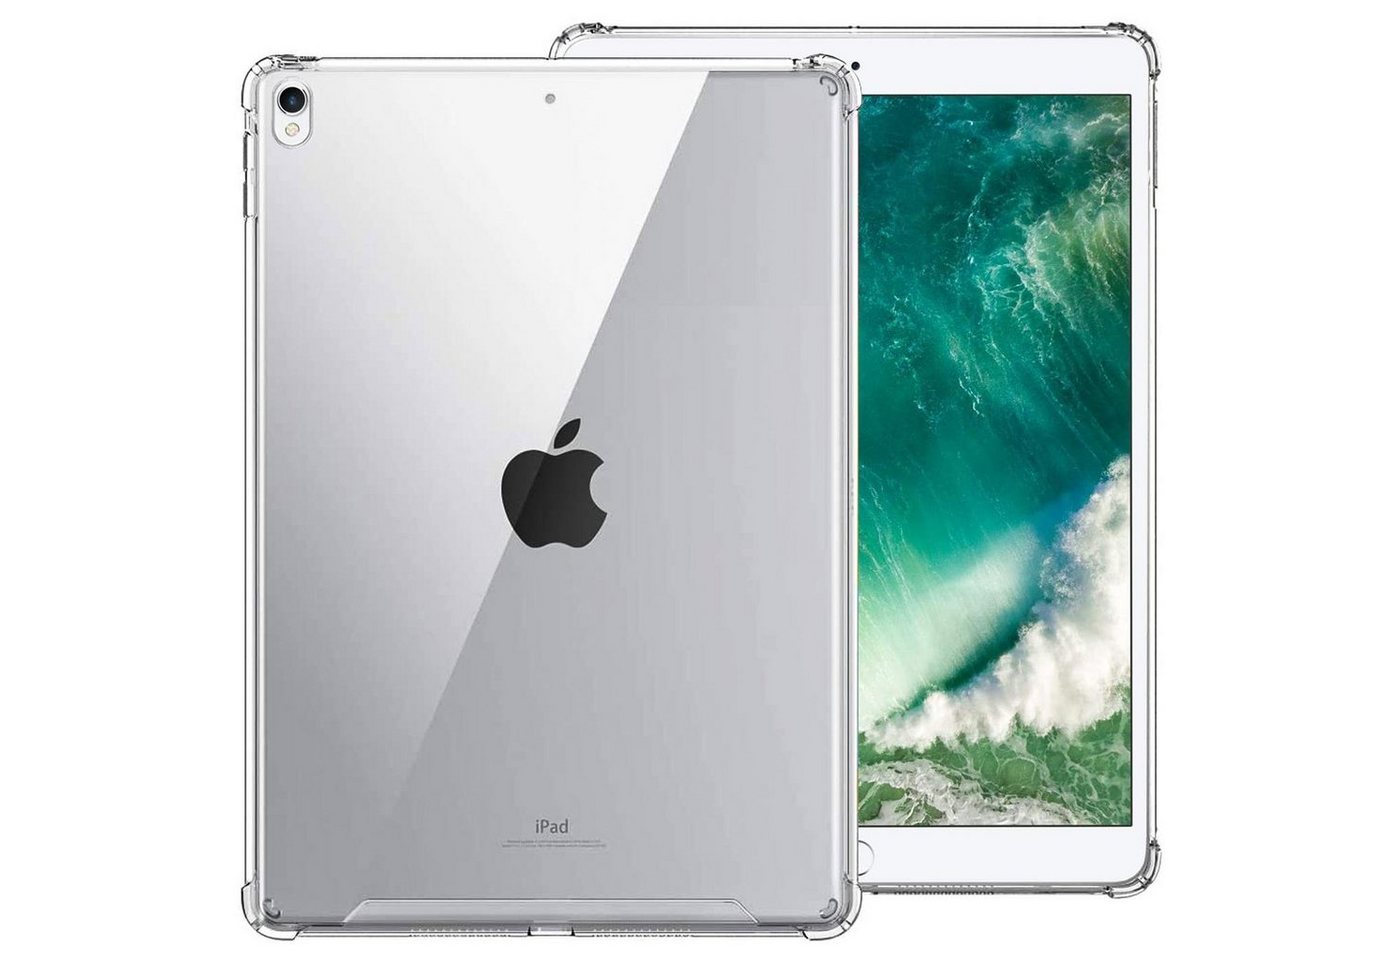 CoolGadget Tablet-Hülle Ultraleichte Schutzhülle für iPad Pro 10.5 26,7 cm (10,5 Zoll), Kantenschutz robustes Slim Case für Apple iPad Pro 10.5 Tablet Hülle von CoolGadget